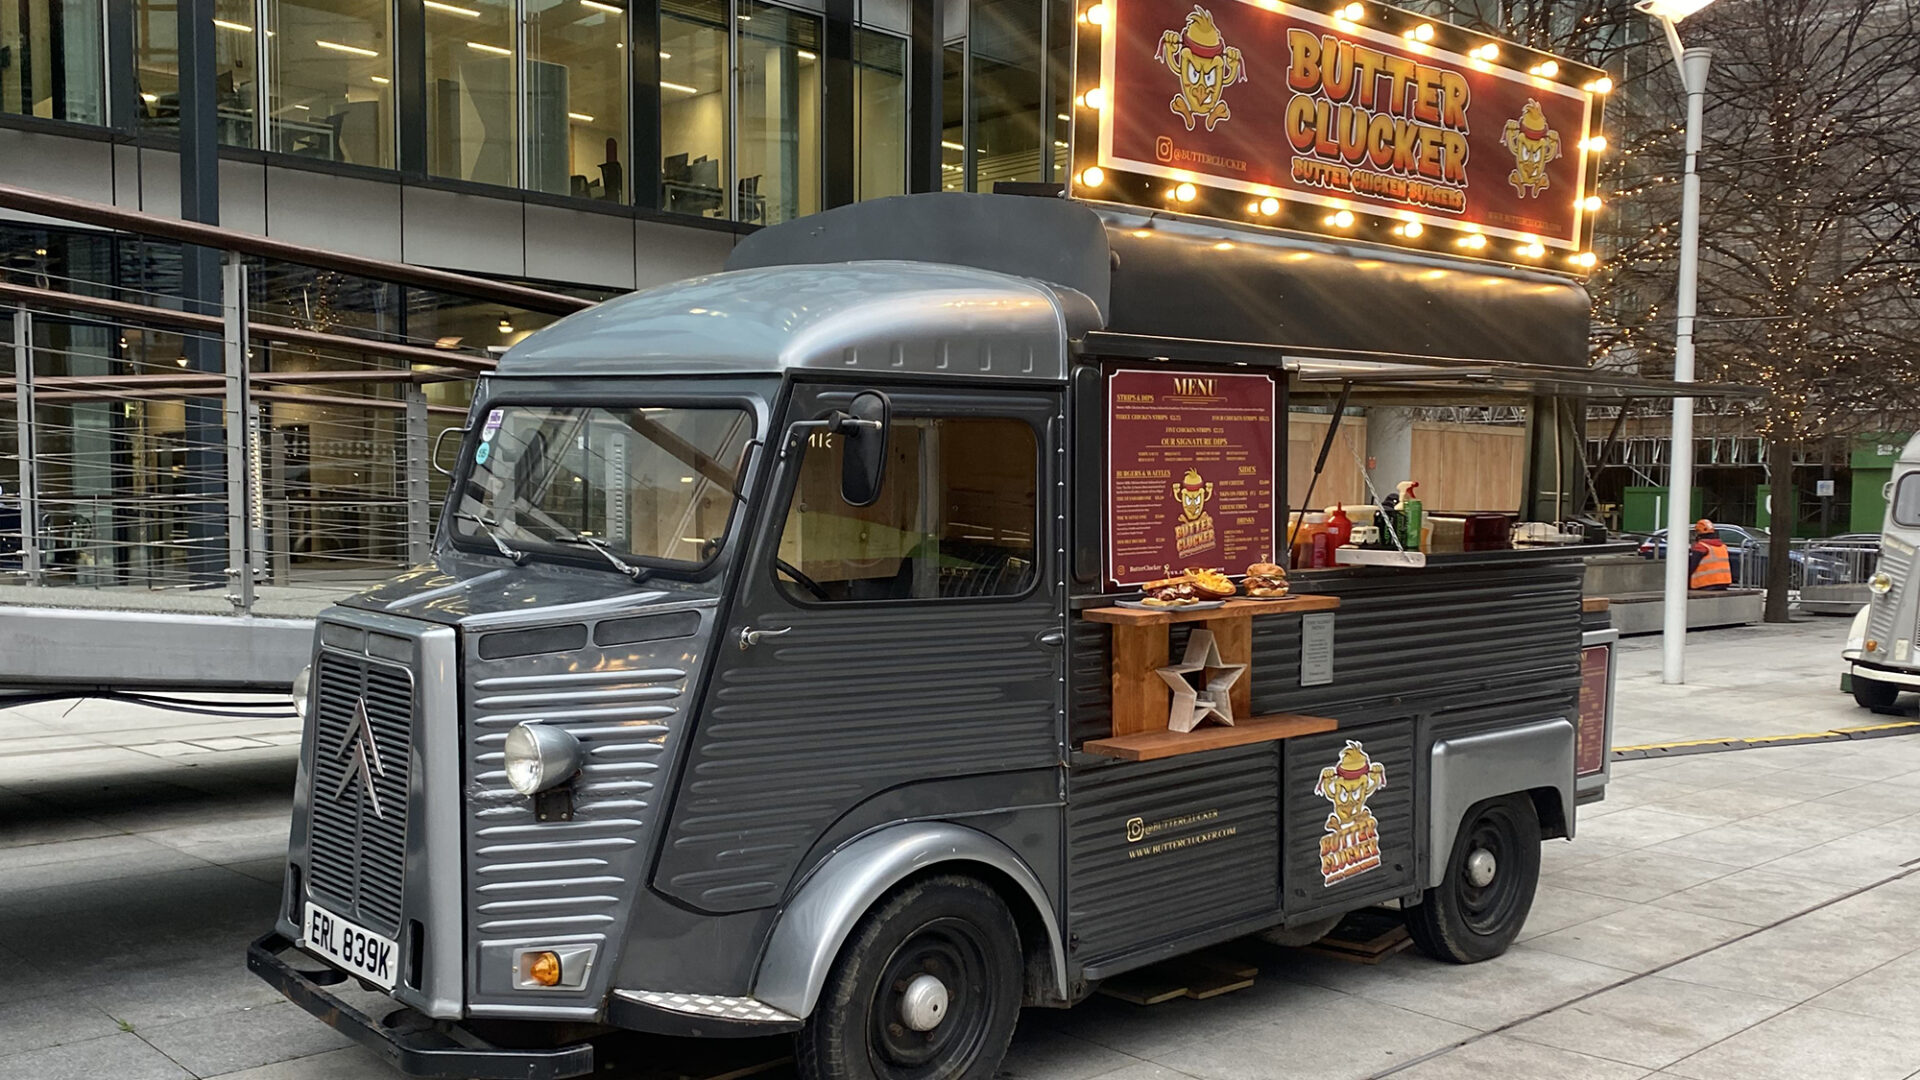 Butter Clucker Food Truck, Merchant Square, Paddington